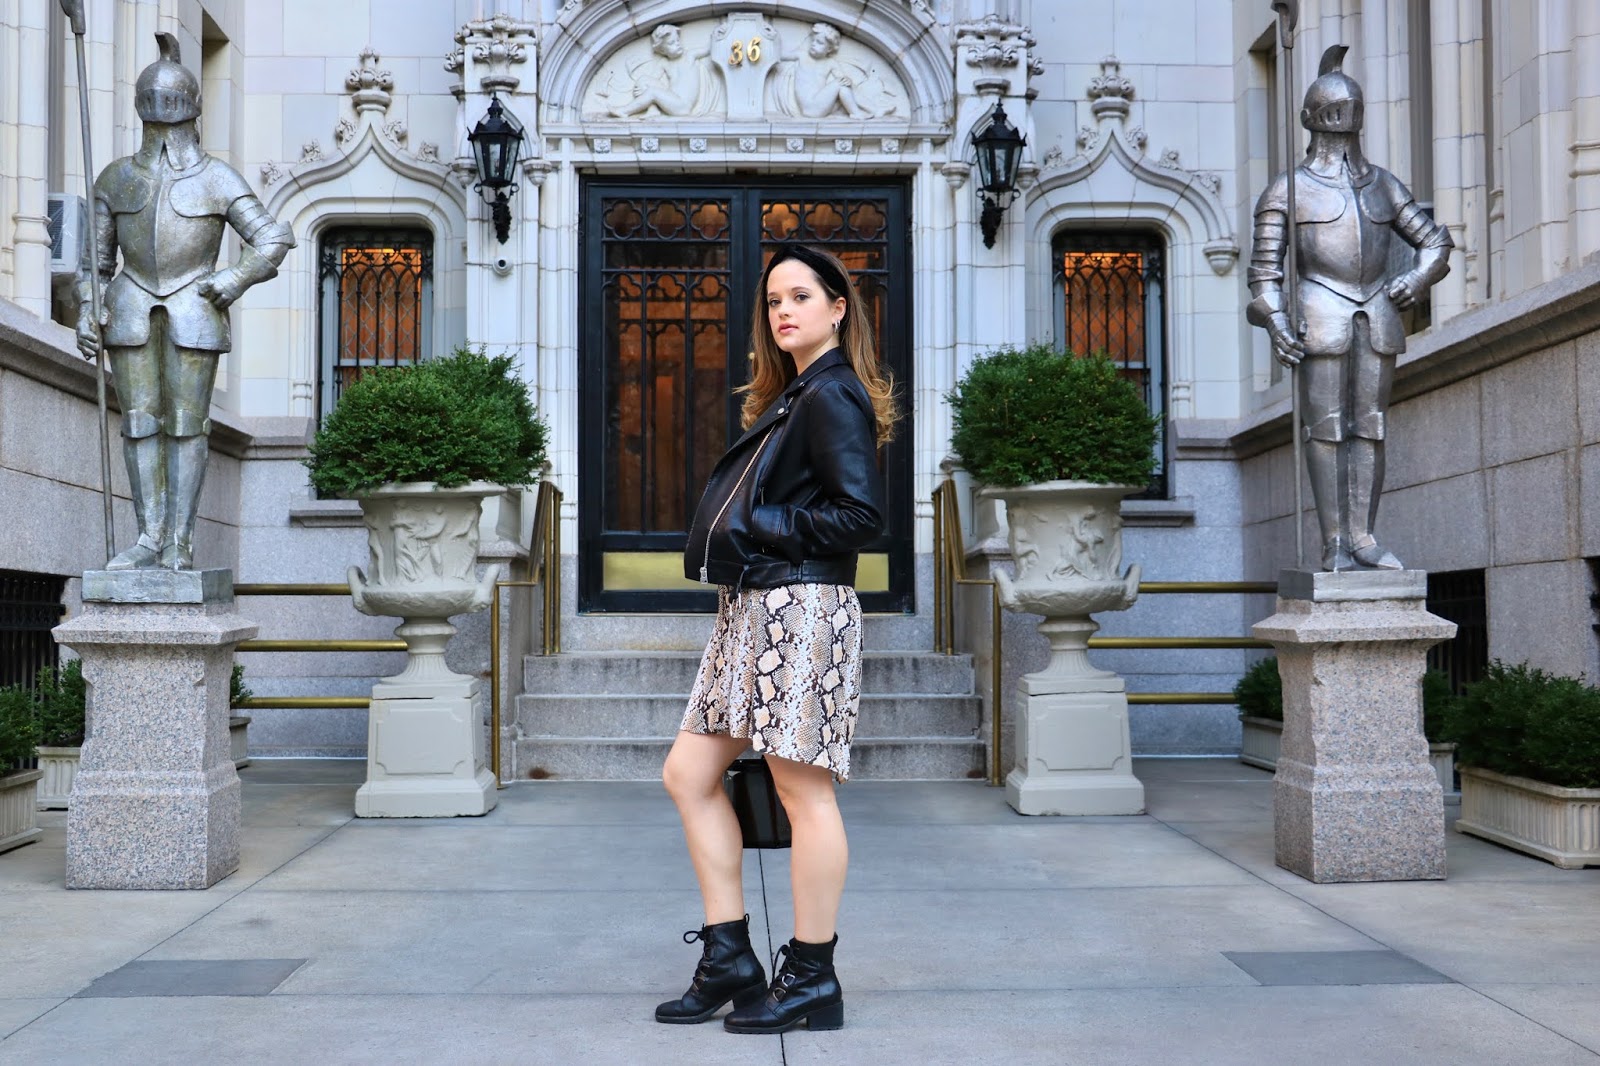 Nyc fashion blogger Kathleen Harper's photo shoot in Gramercy Park.